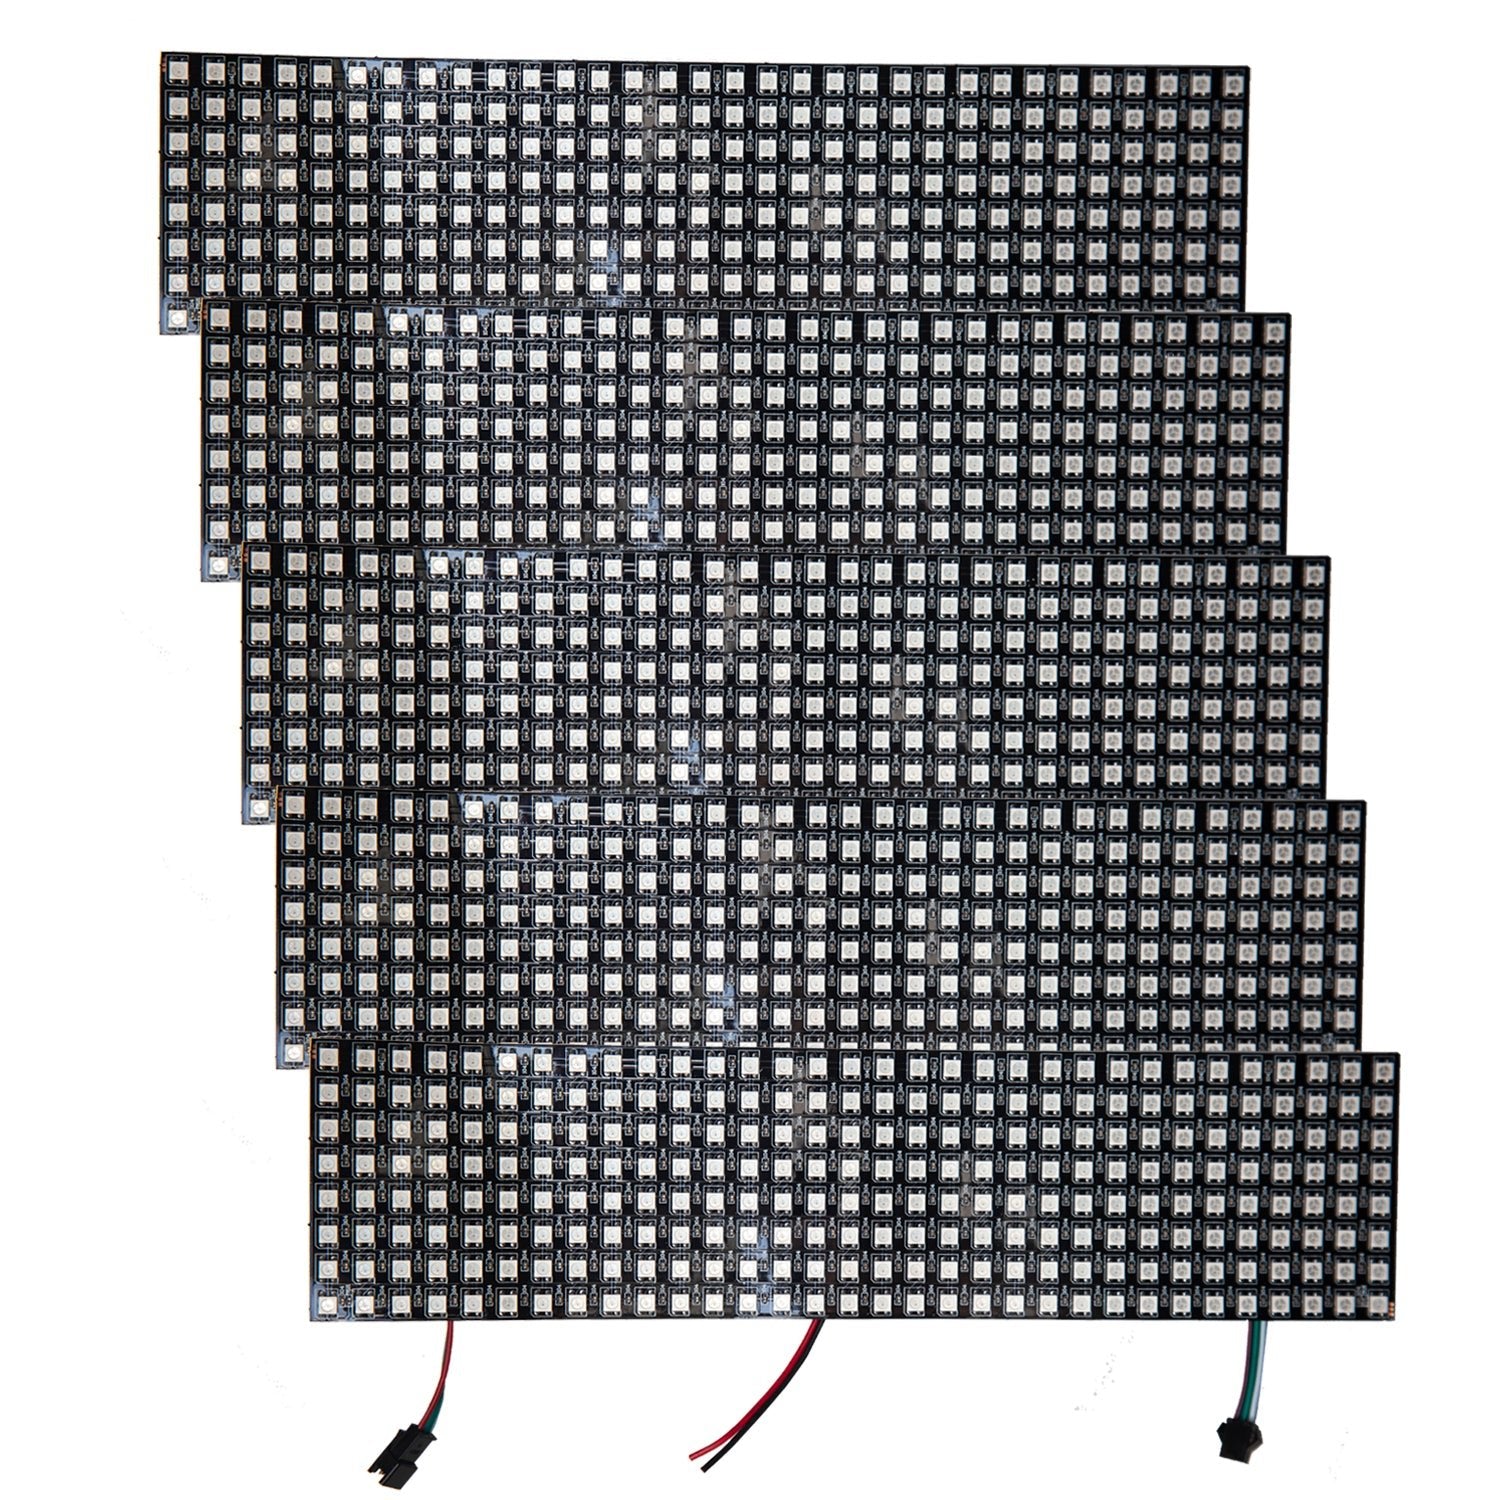 WS2812B Matrix LED Panel Modul mit individuell adressierbaren RGB LED Pixels - AZ-Delivery